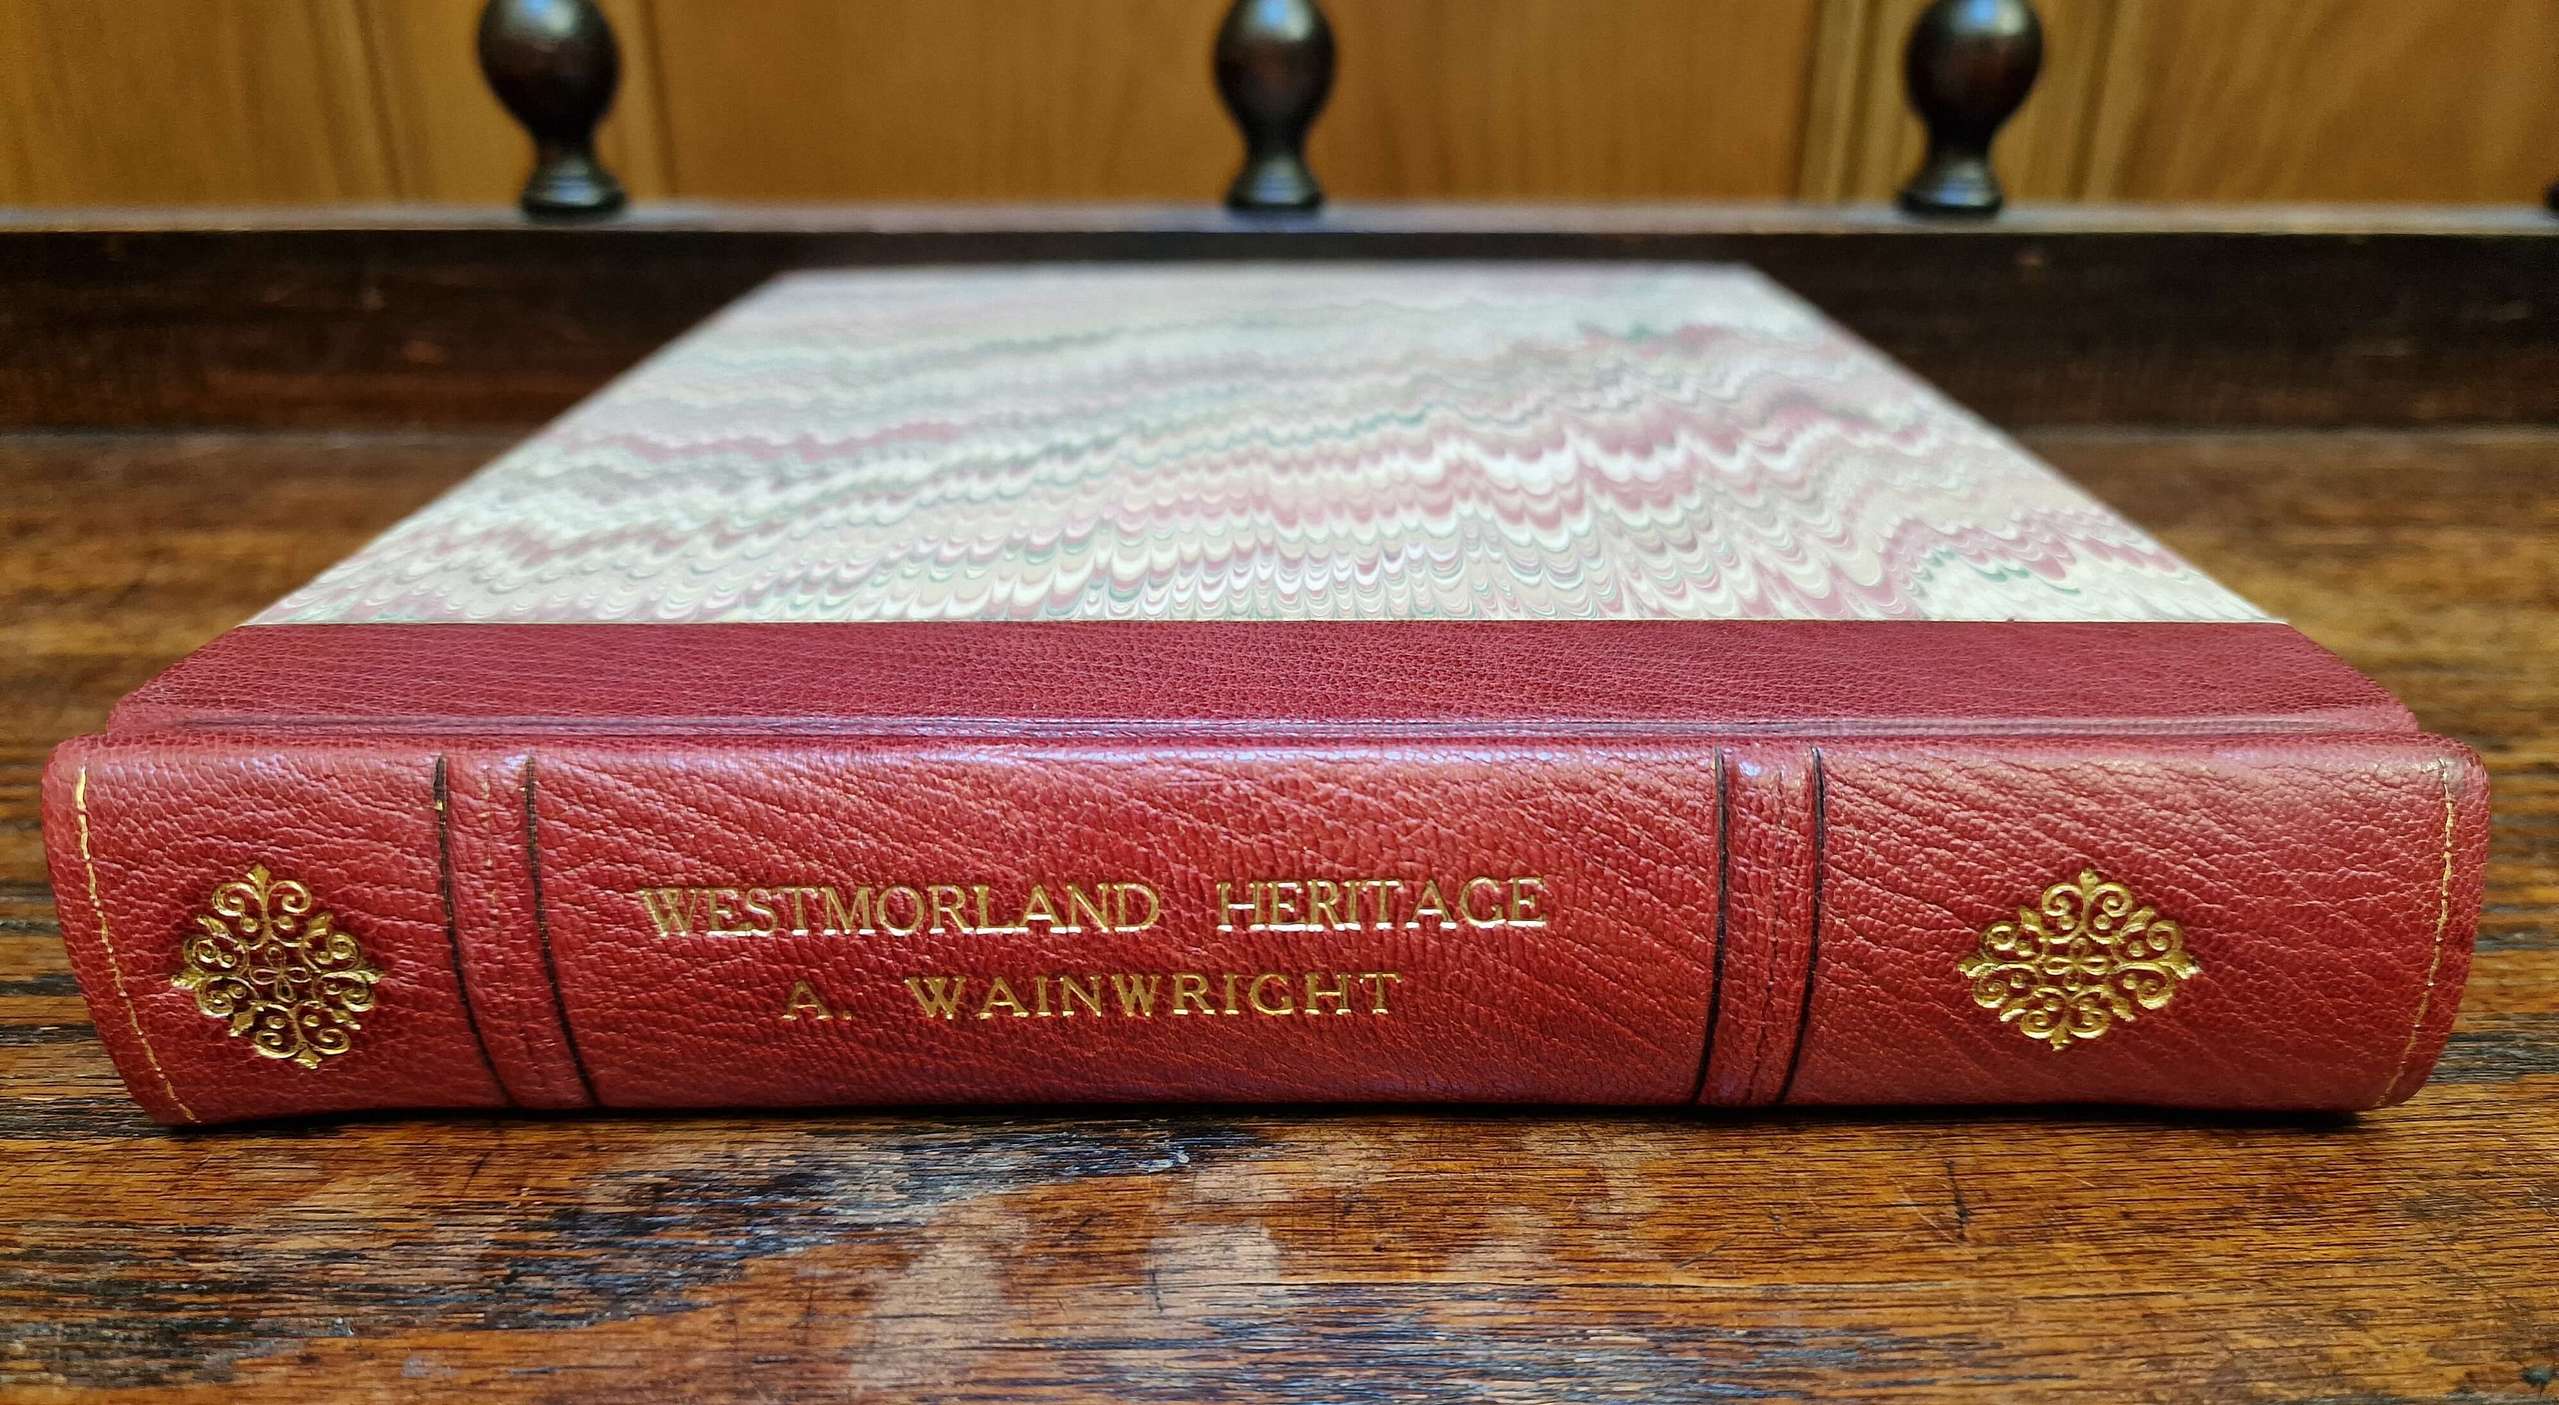 Westmorland Heritage - Popular Edition 2